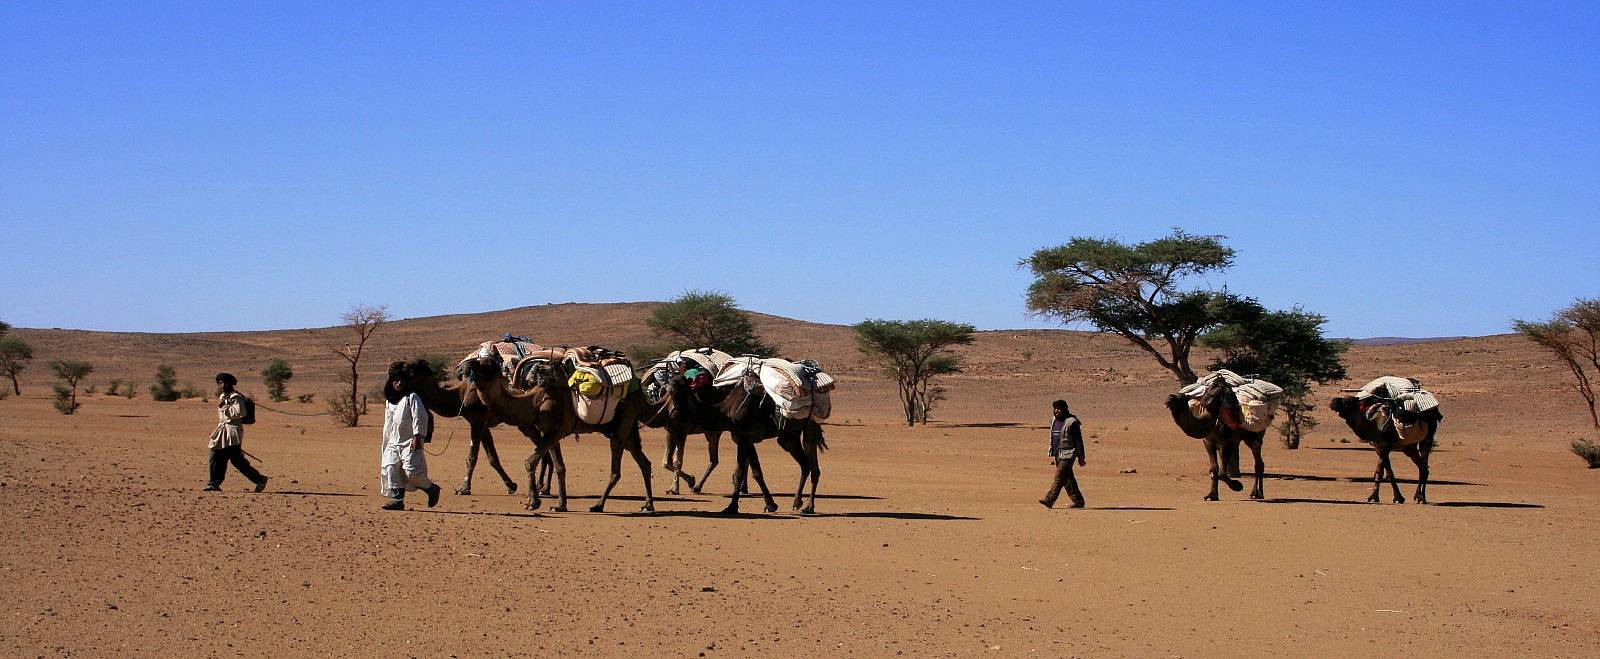 Carovane e cammellieri: dalle dune alle oasi